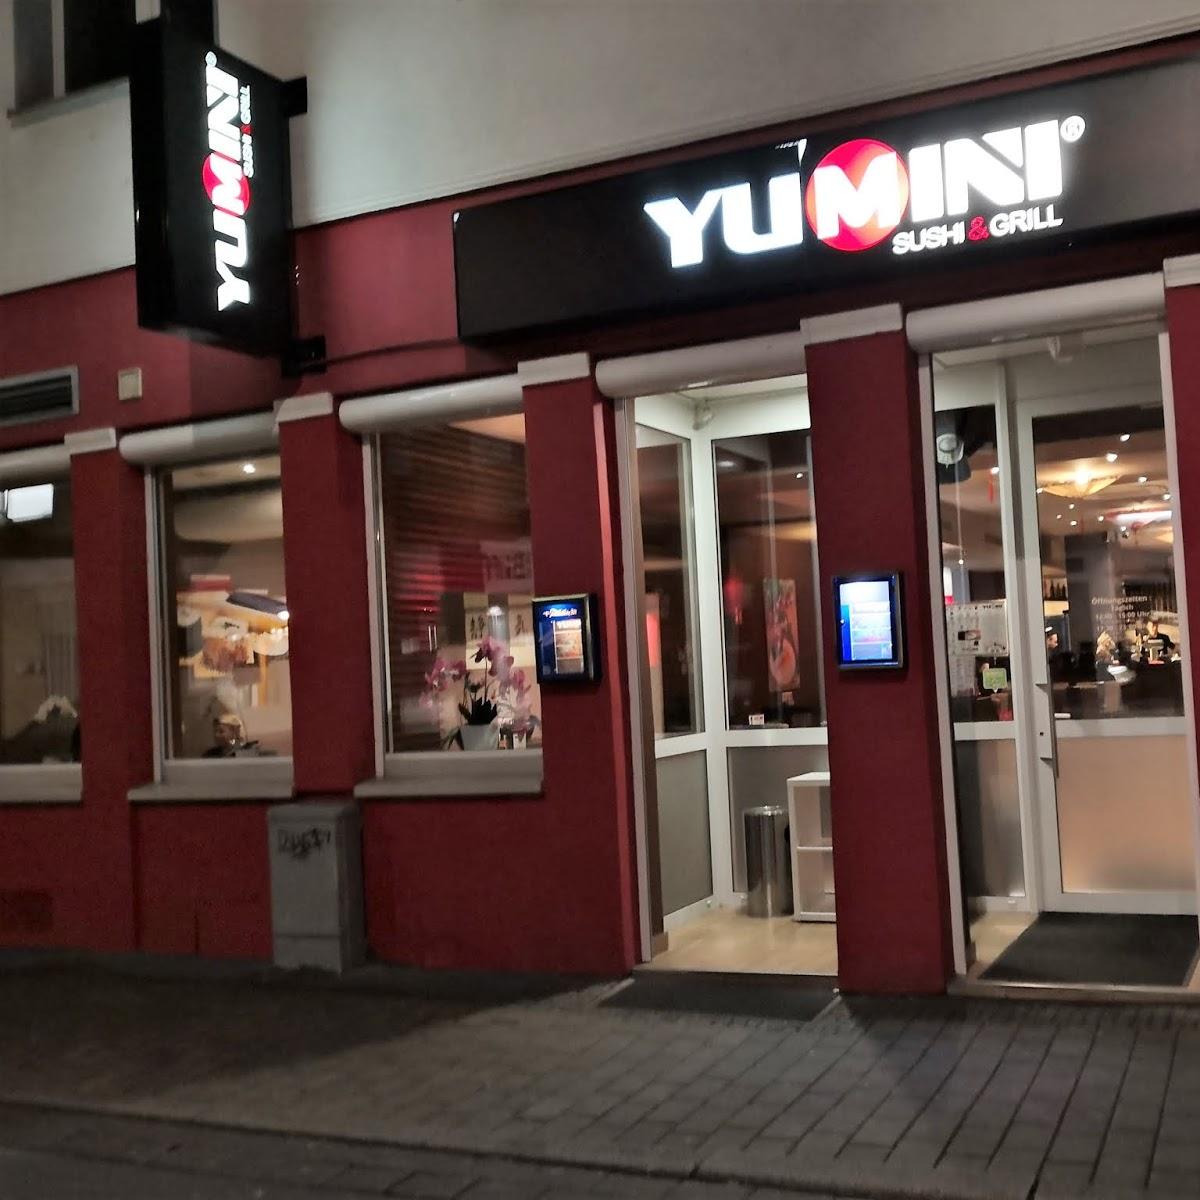 Restaurant YUMINI - in Dortmund